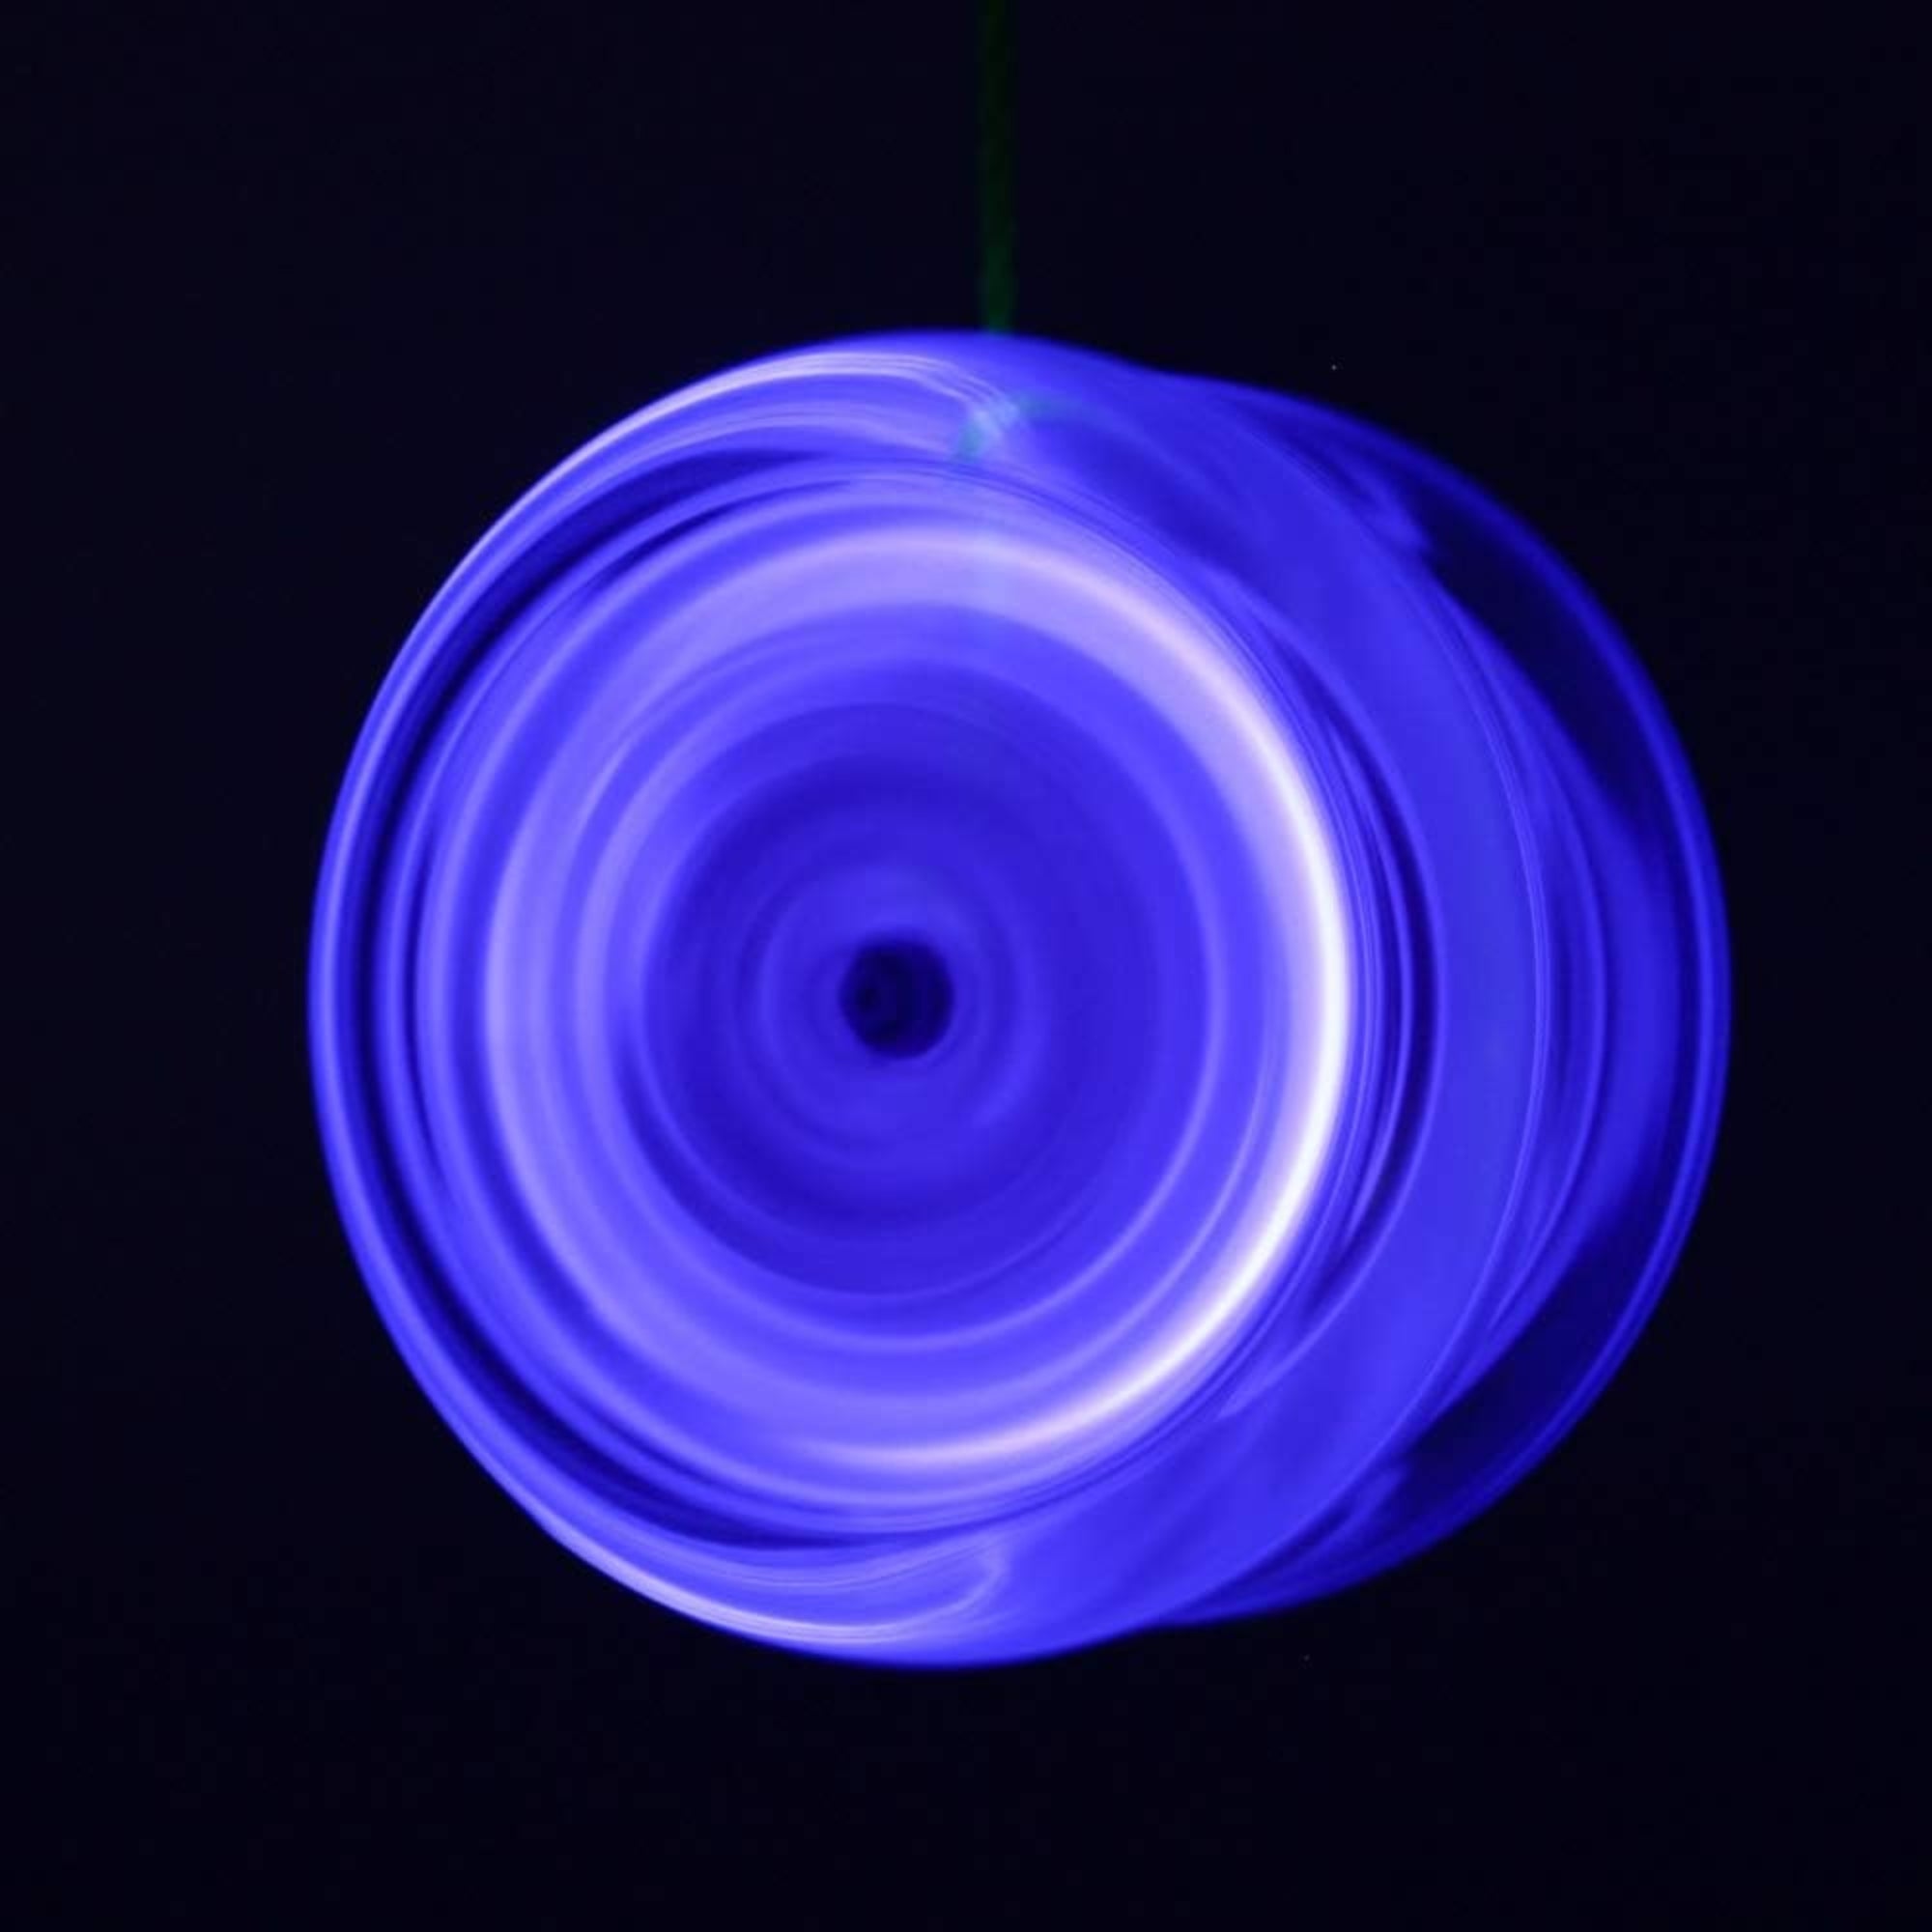 glowing blue yoyo spinning